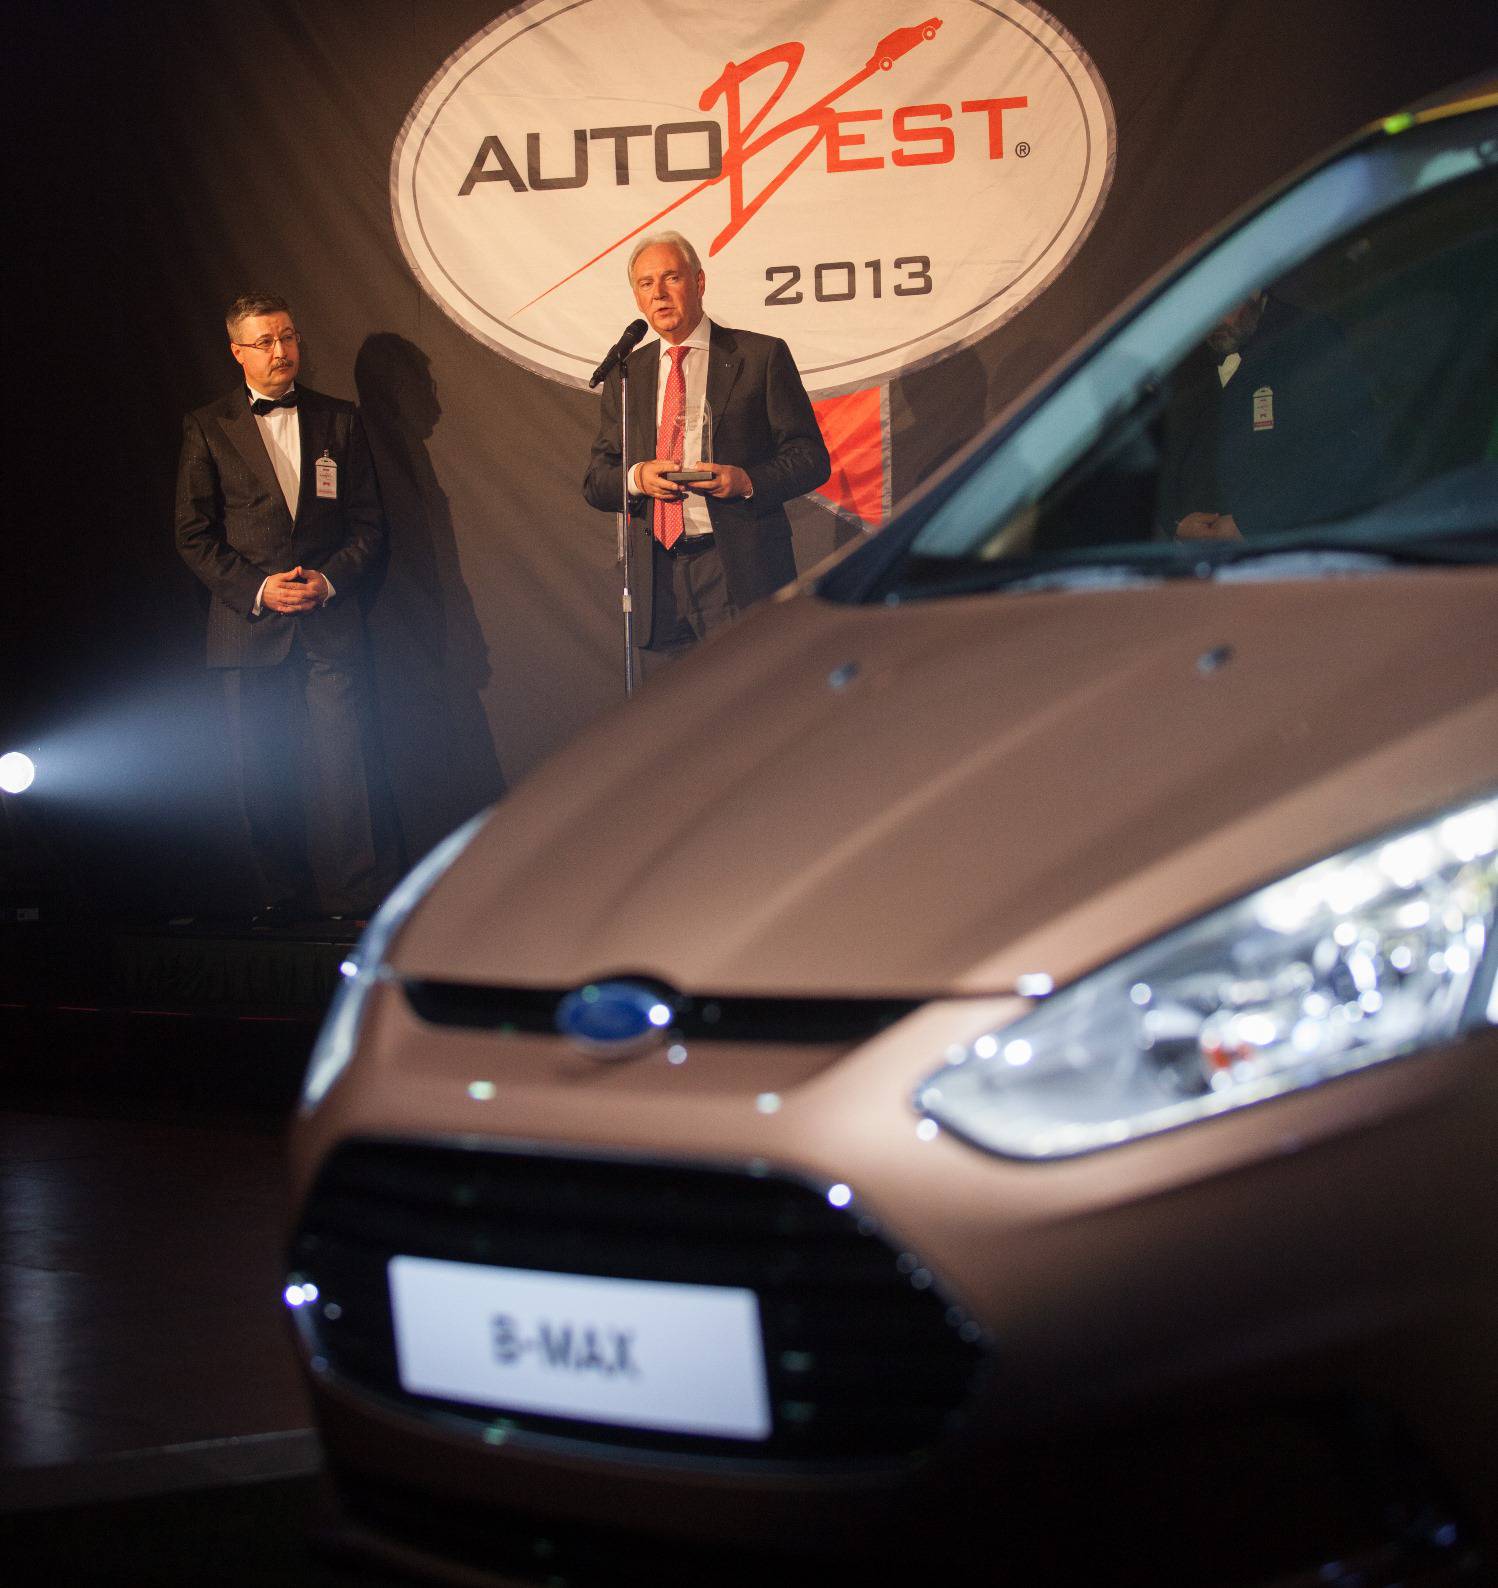 Ford B-Max a primit oficial titlul AutoBest 2013